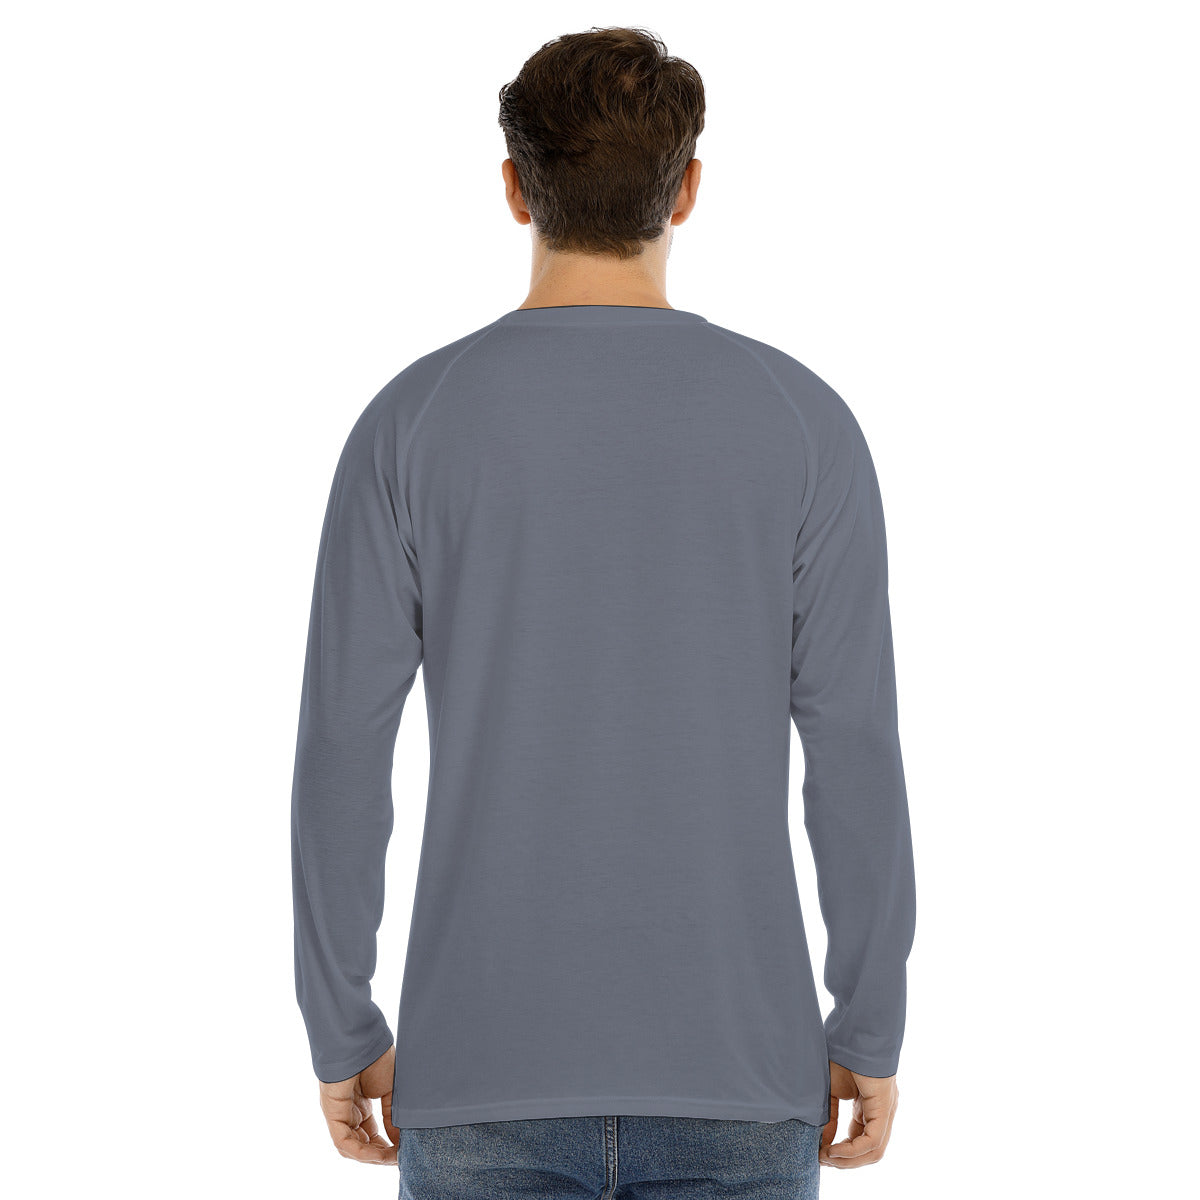 Citiscape 102 -- Men's Long Sleeve T-shirt With Raglan Sleeve